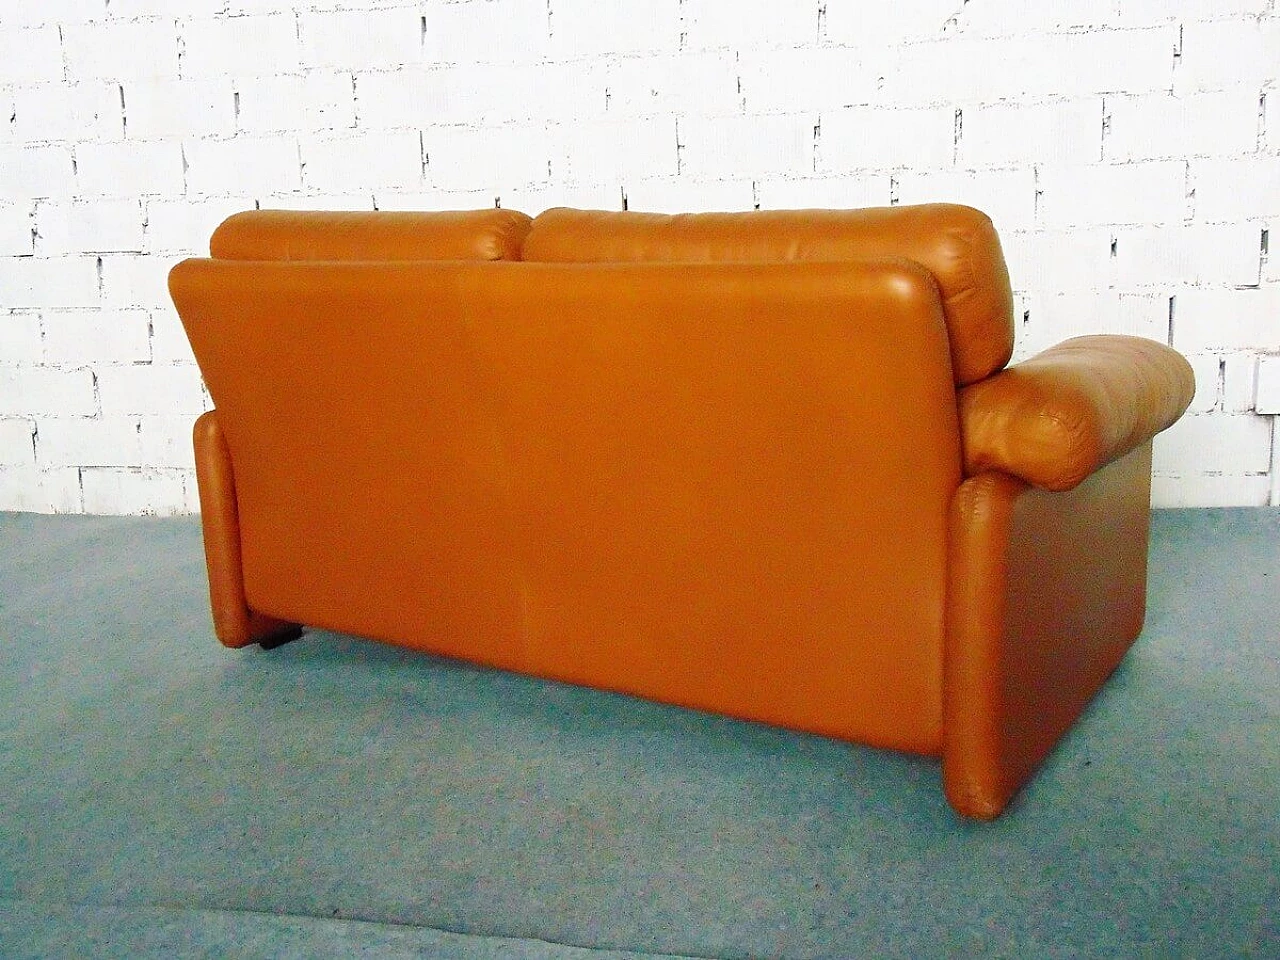 Coronado leather sofa by Tobia Scarpa for B&B Italia, 1970s 1467089